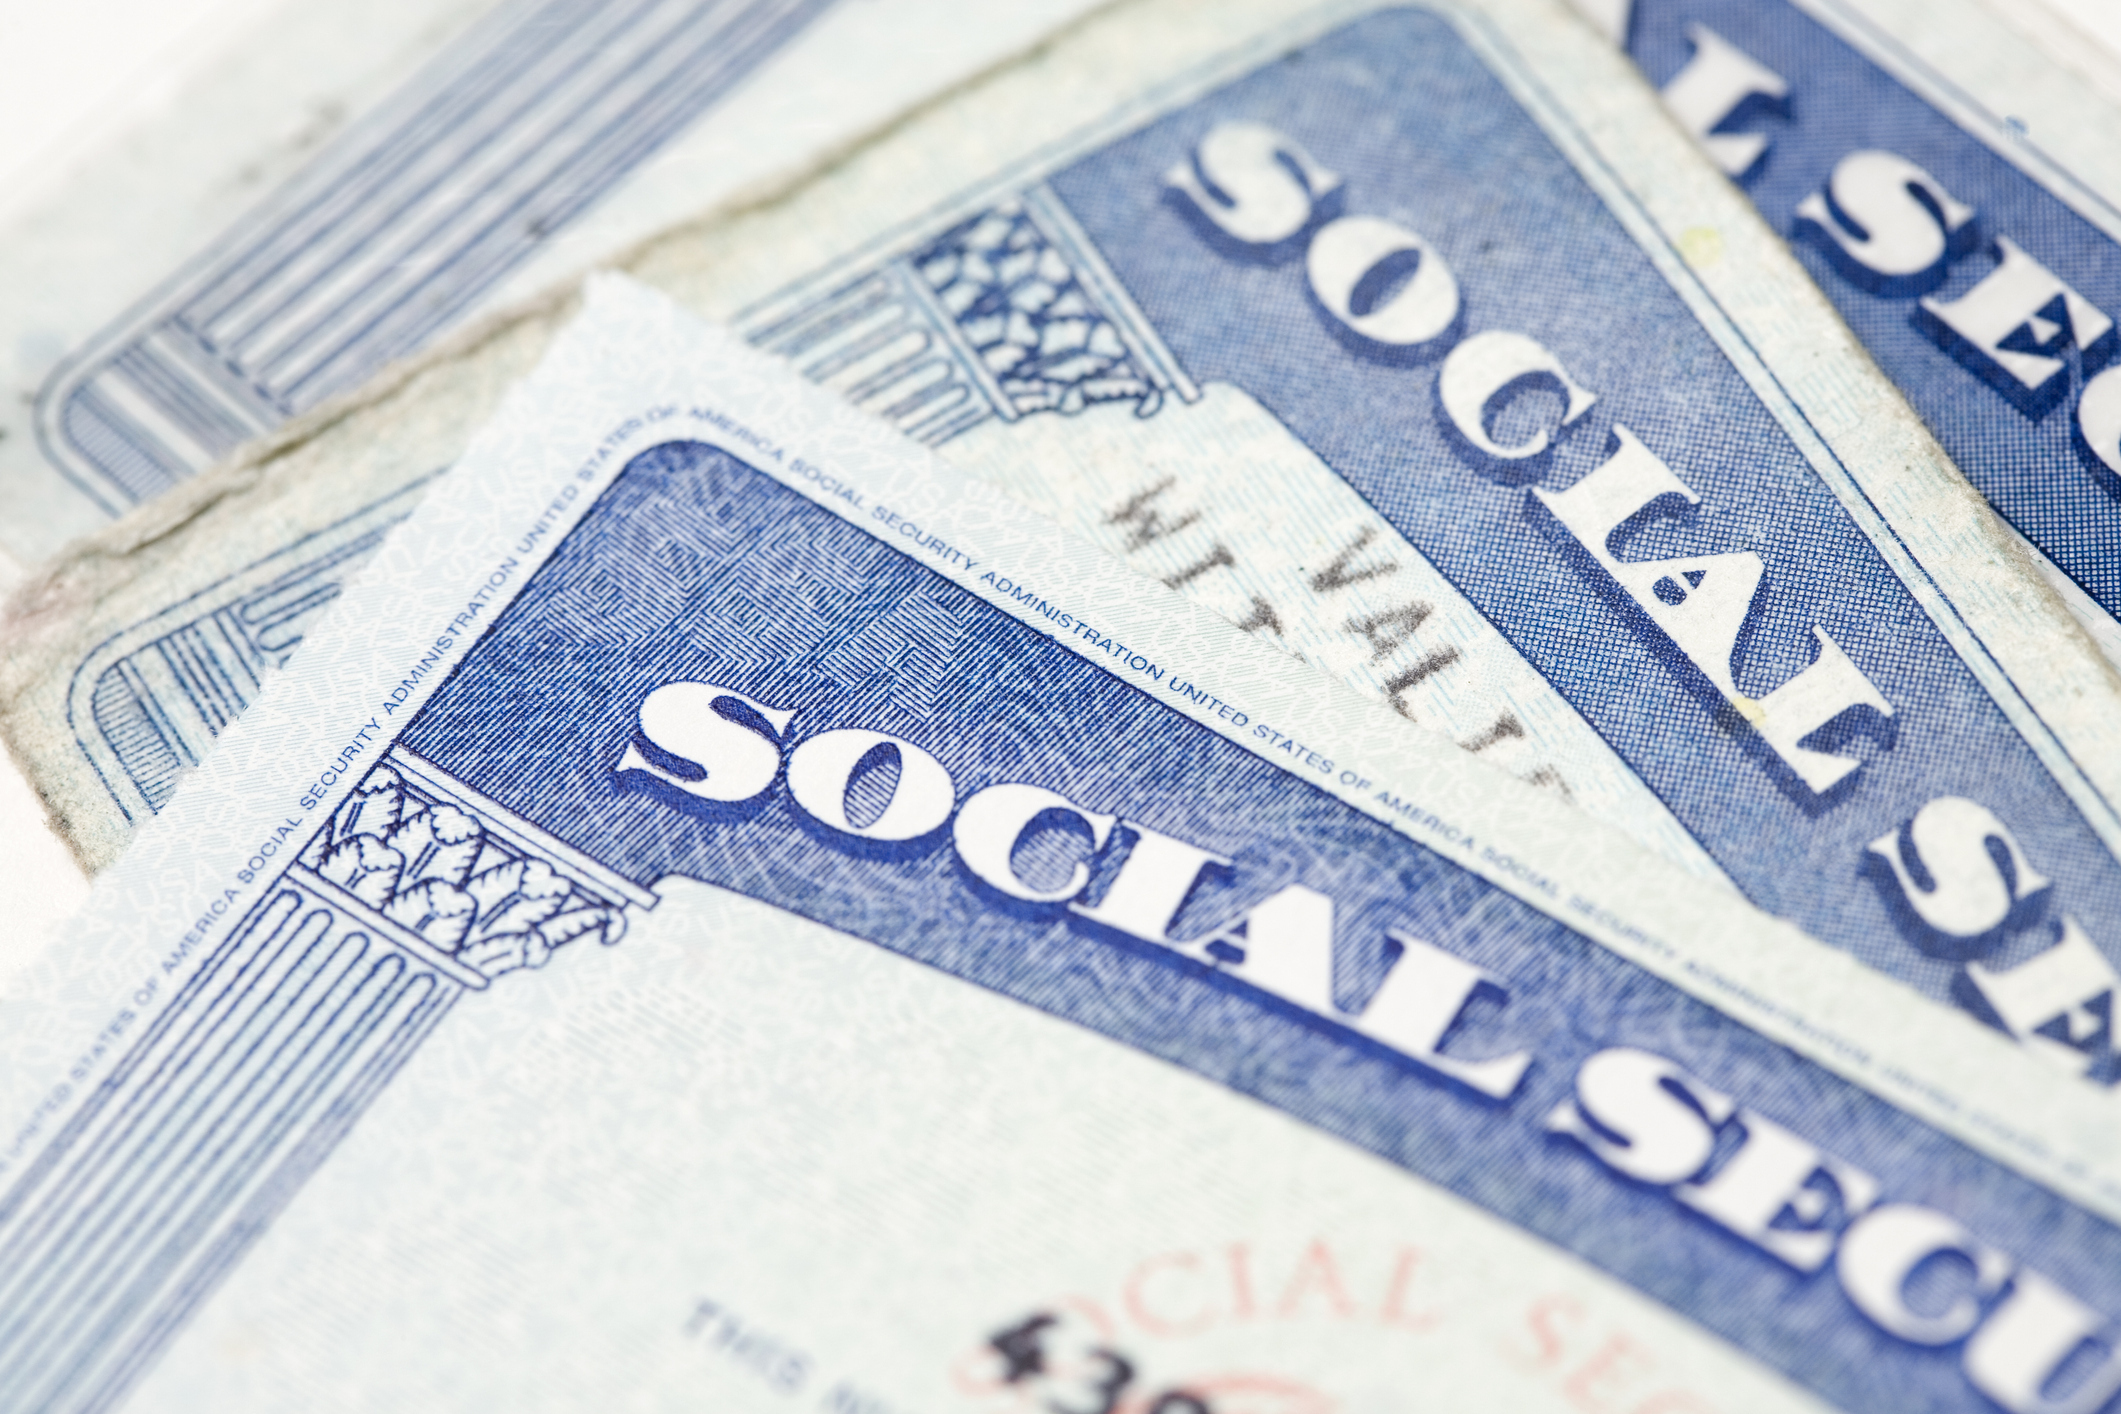 3 Social Security cards